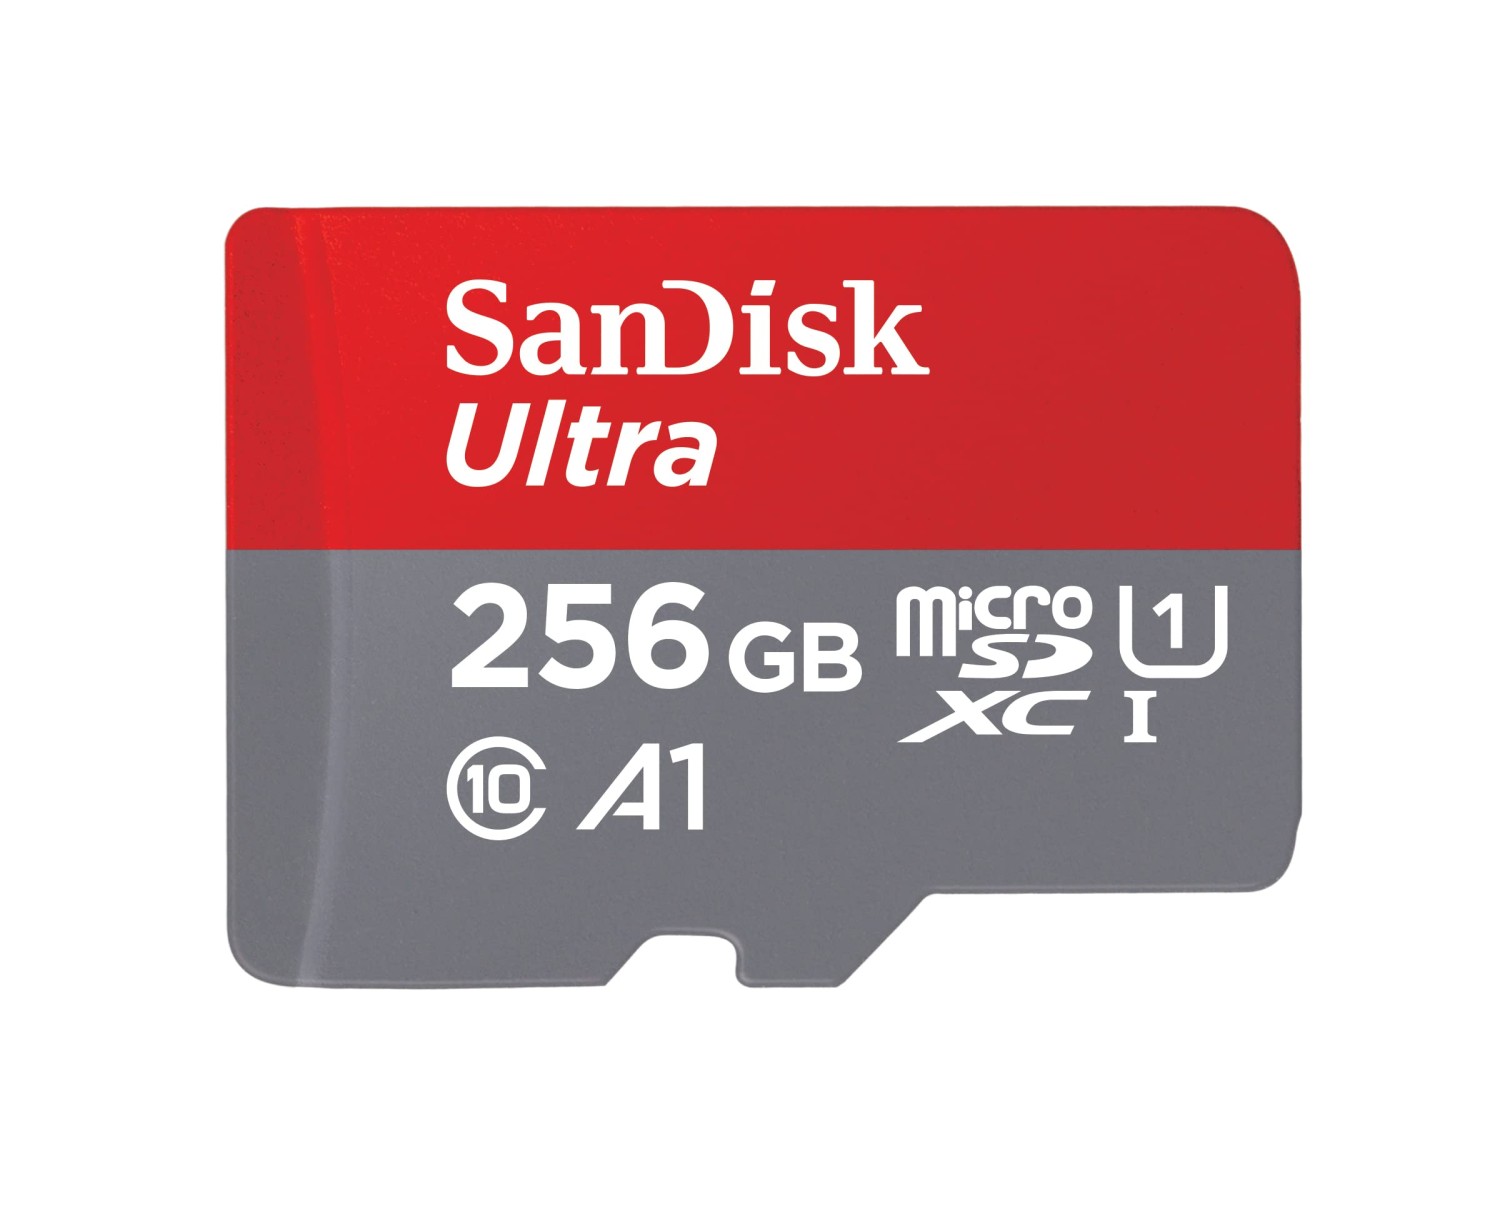 SD CARD 256GB SANDISK